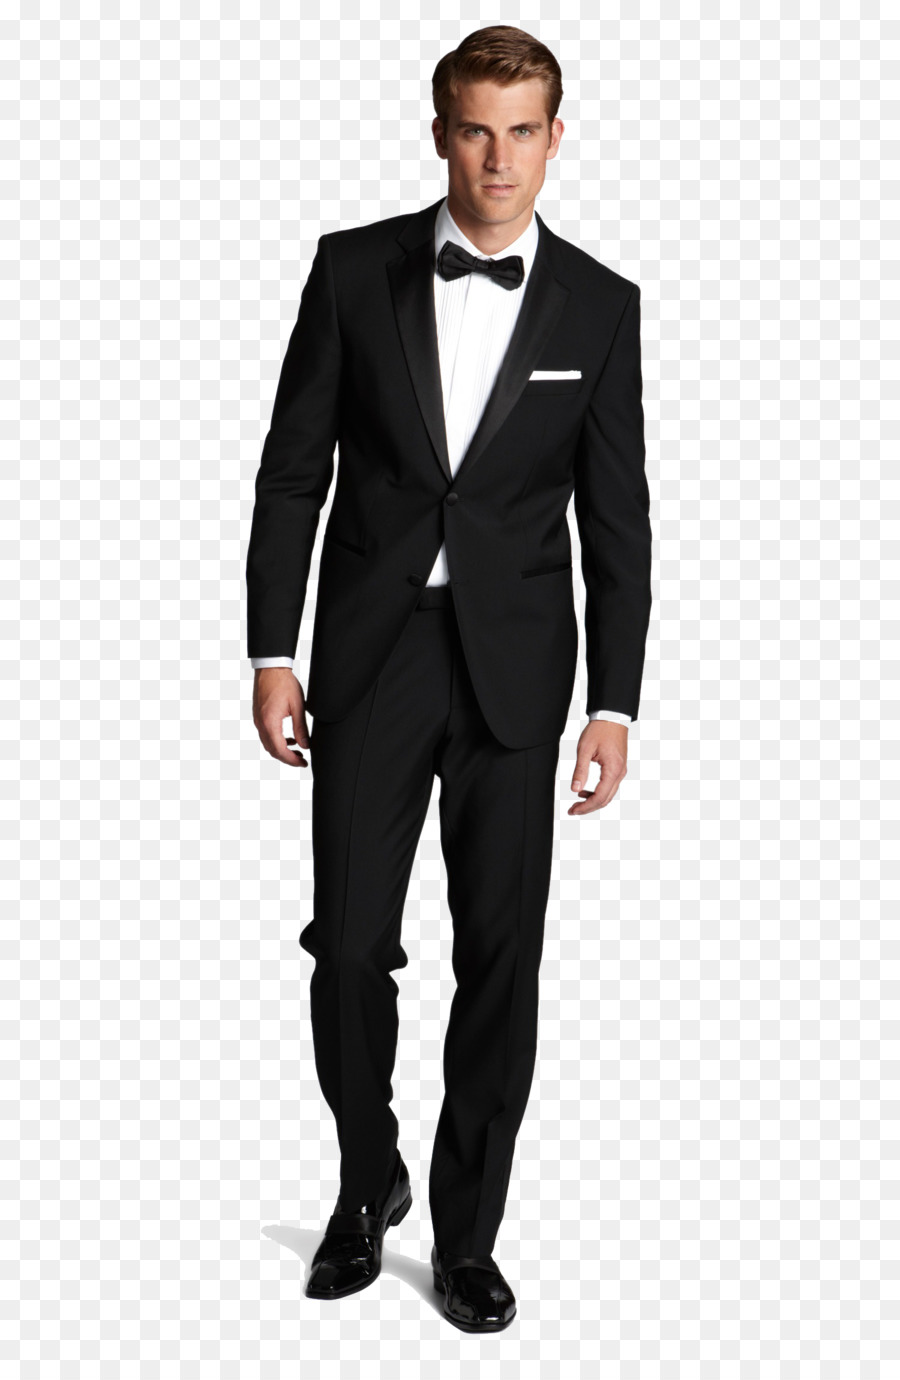 T-shirt Hugo Boss Boss Tuxedo Suit - lo sposo png trasparenti immagini